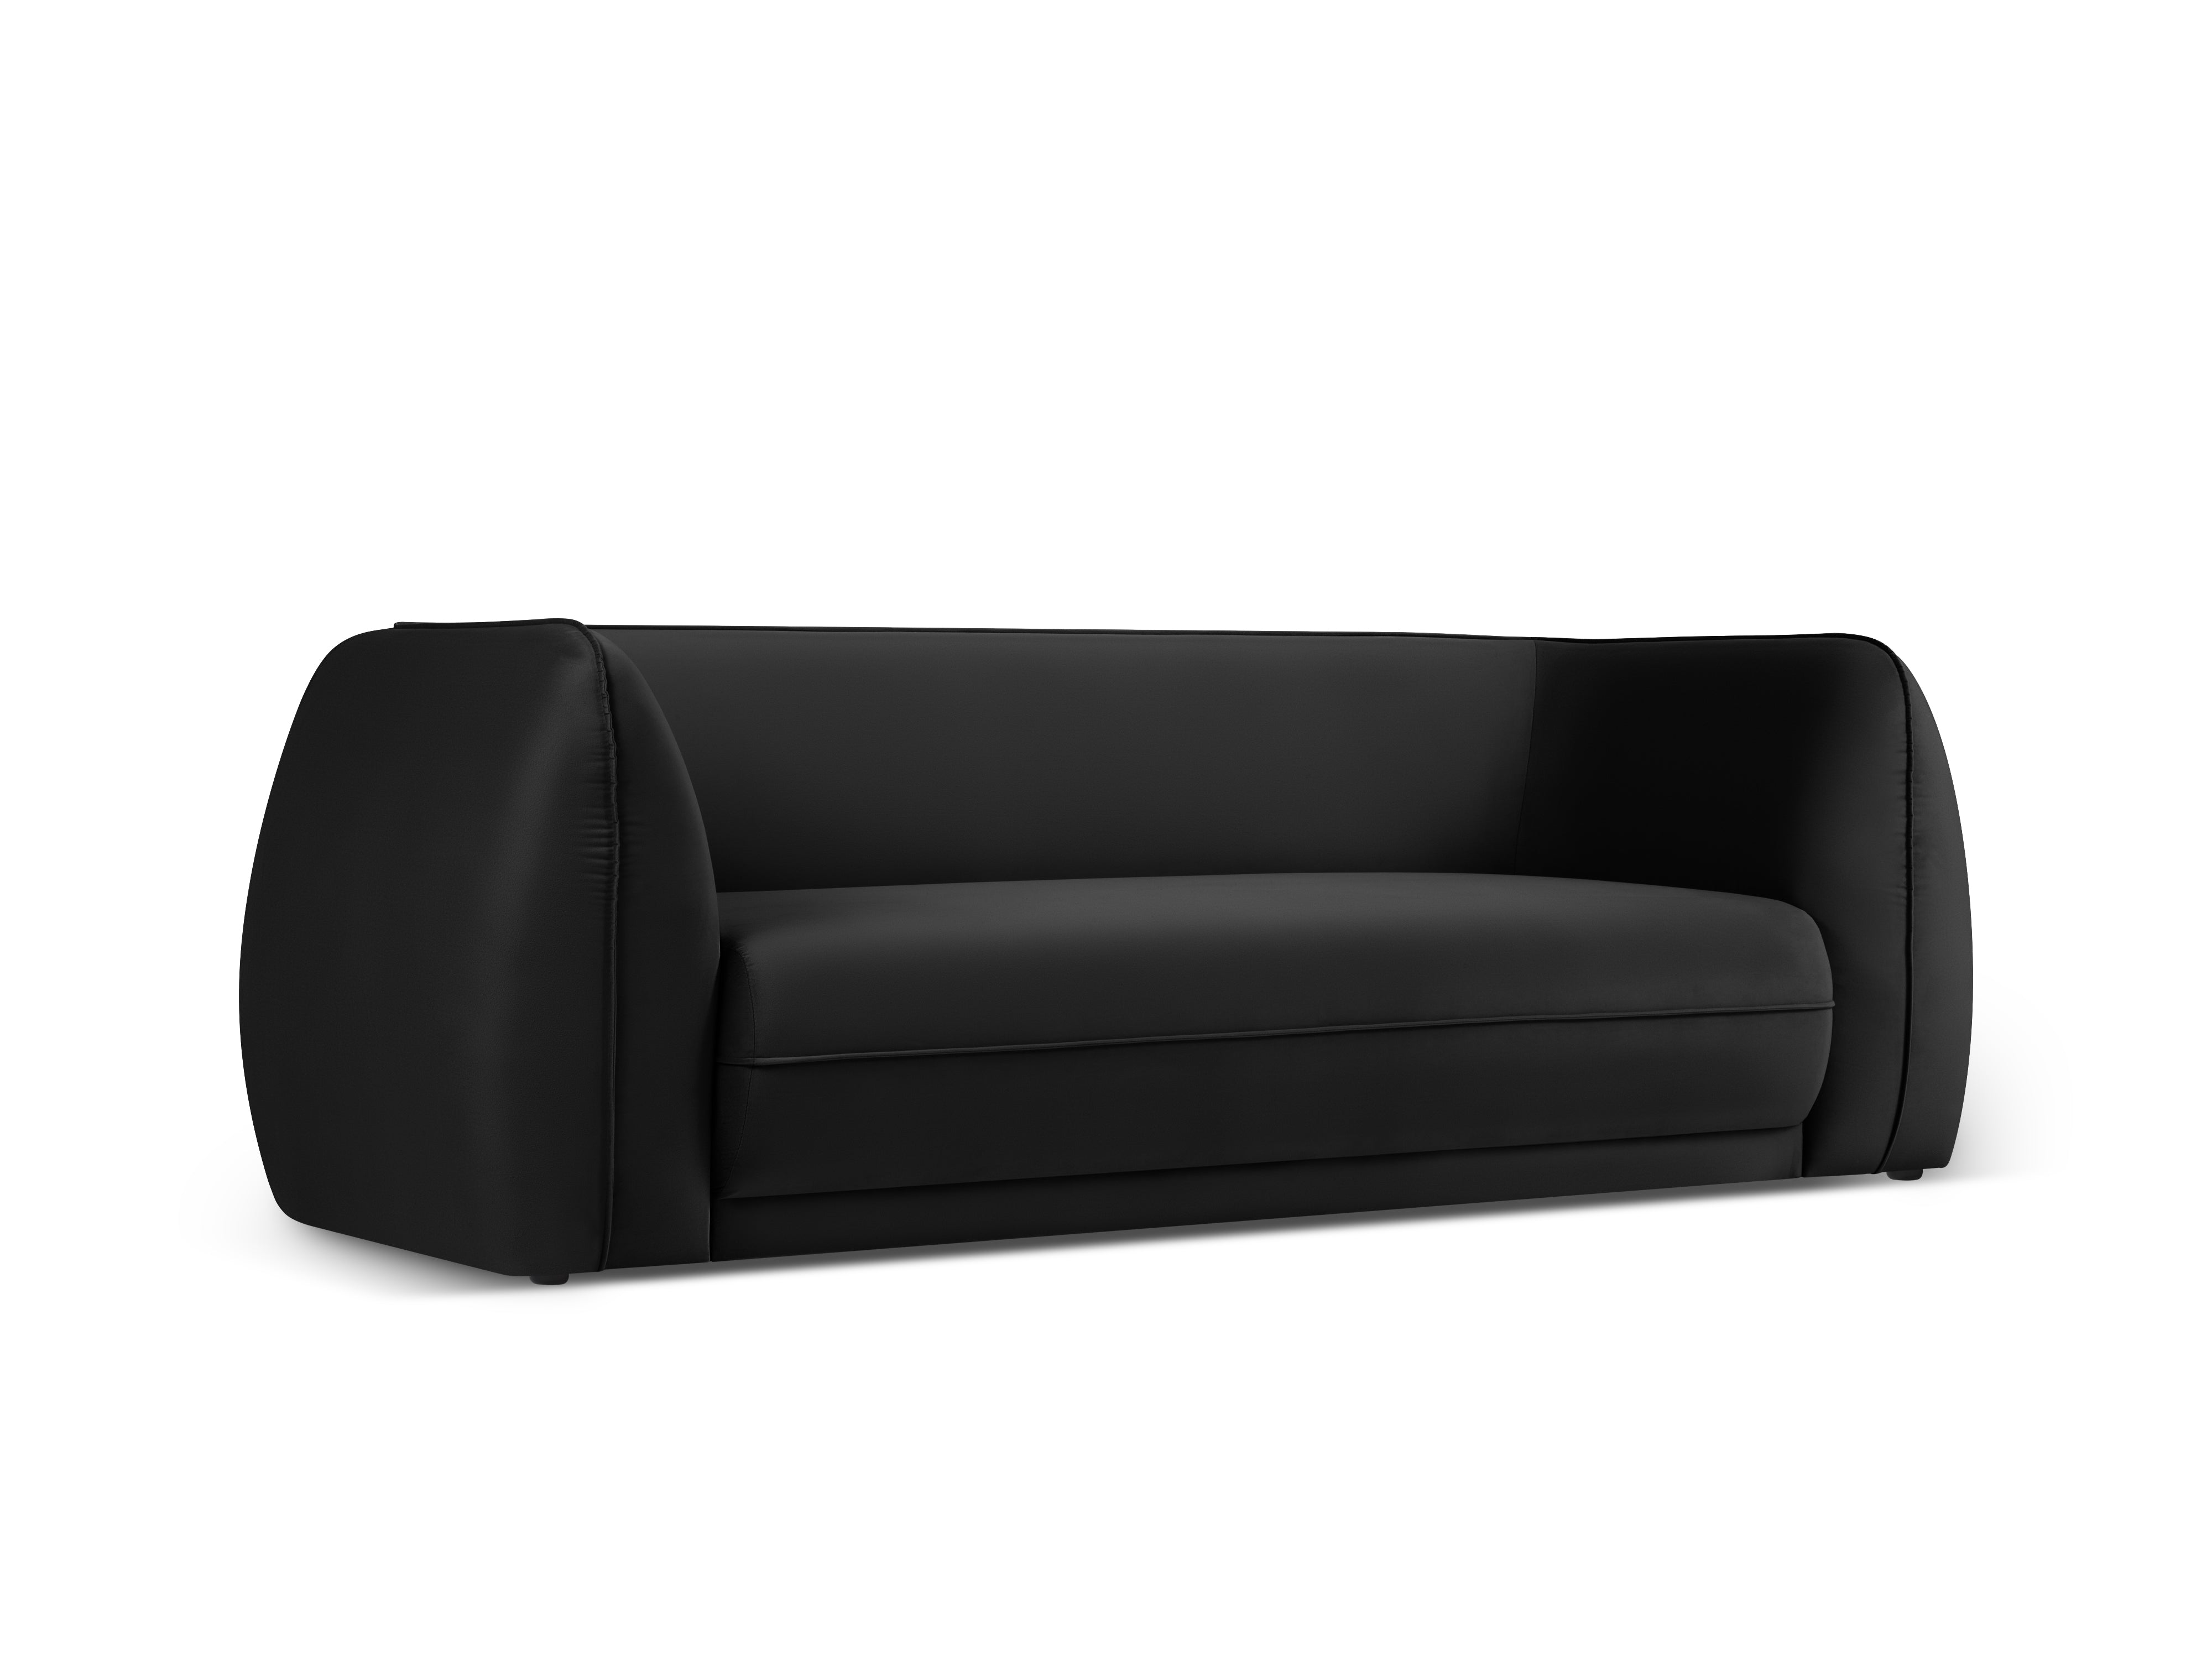 Velvet Sofa, "Lando", 3 Seats, 225x100x77
Made in Europe, Micadoni, Eye on Design